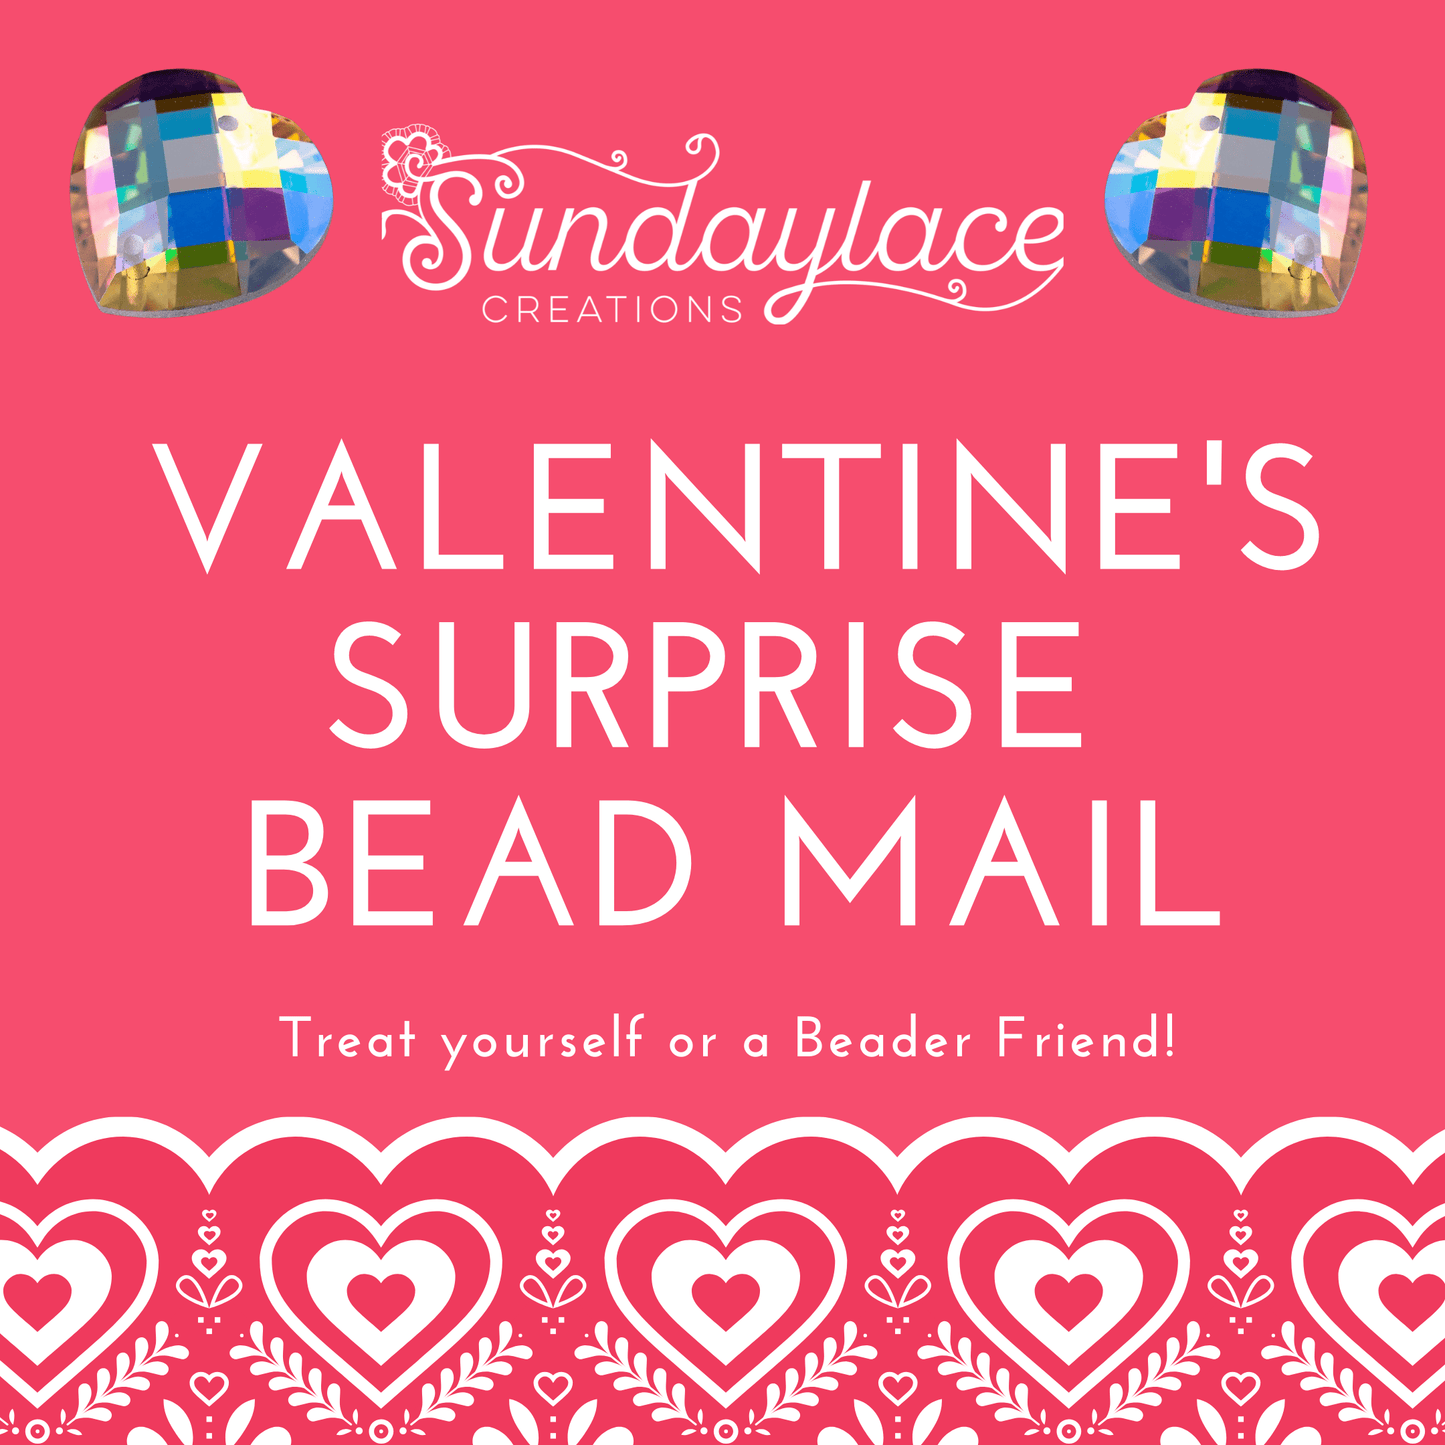 Promotional Products Promotions Valentine Surprise Bead Mail LAST CHANCE: Valentine's Supplies Surprise Bag!